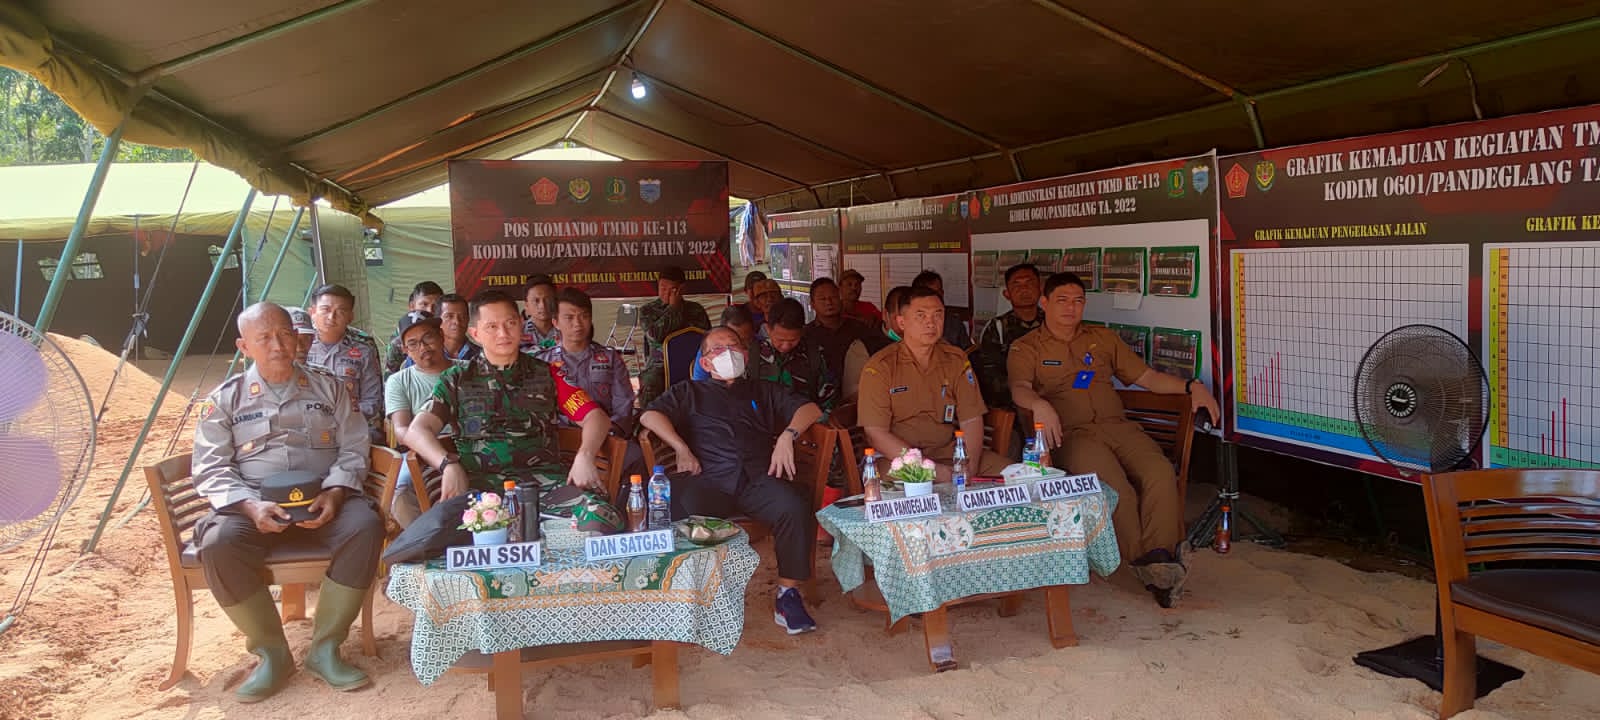 Melaui Vicon, KASAD Jenderal TNI Dudung Abdurachman Menyapa Anggota Satgas TMMD Ke-113 Kodim 0601/Pandeglang